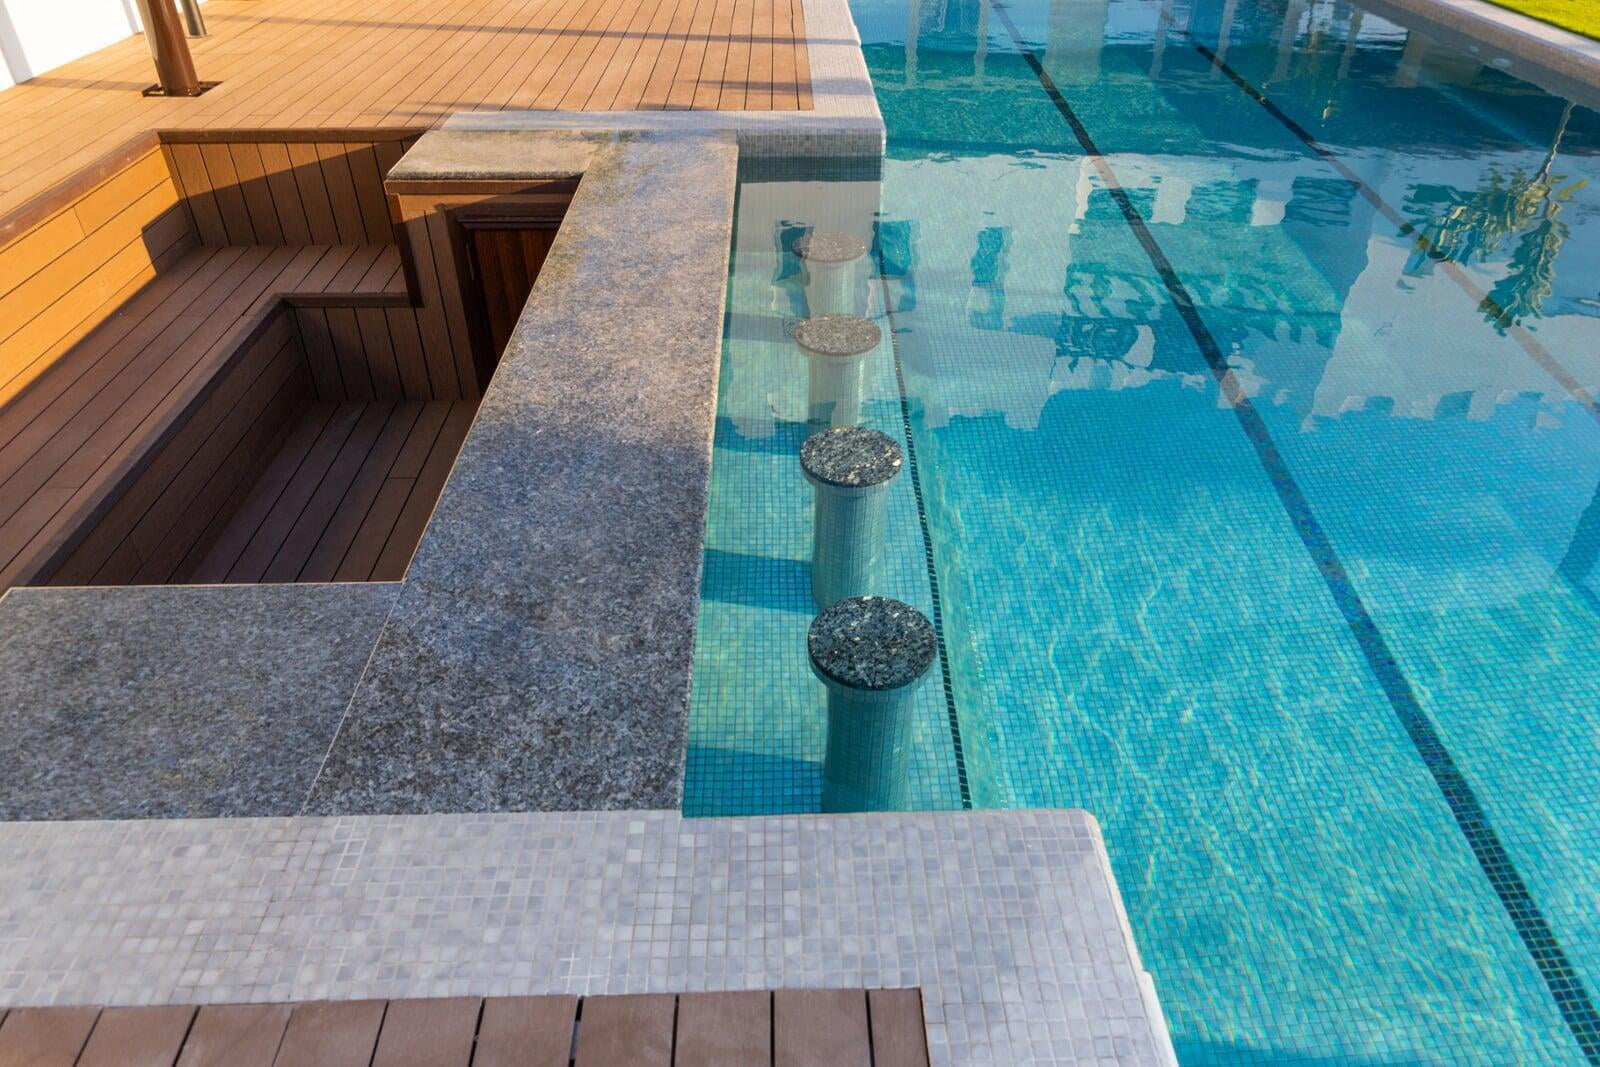 sunken swimming pool bar designs